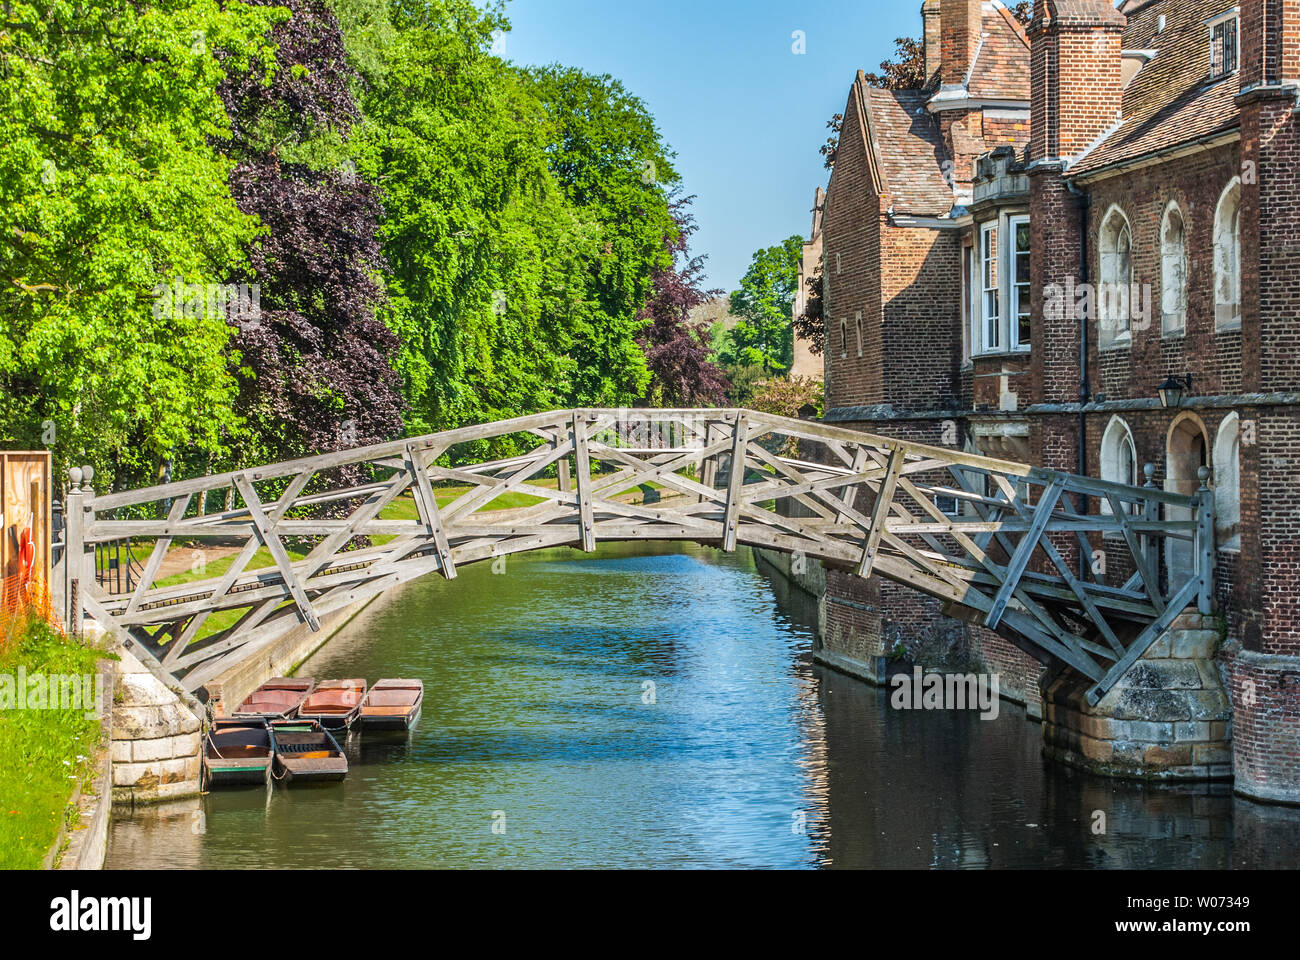 Mathematical Bridge Cambridge - wooden bridge over the River Cam famous for punting. Stock Photo